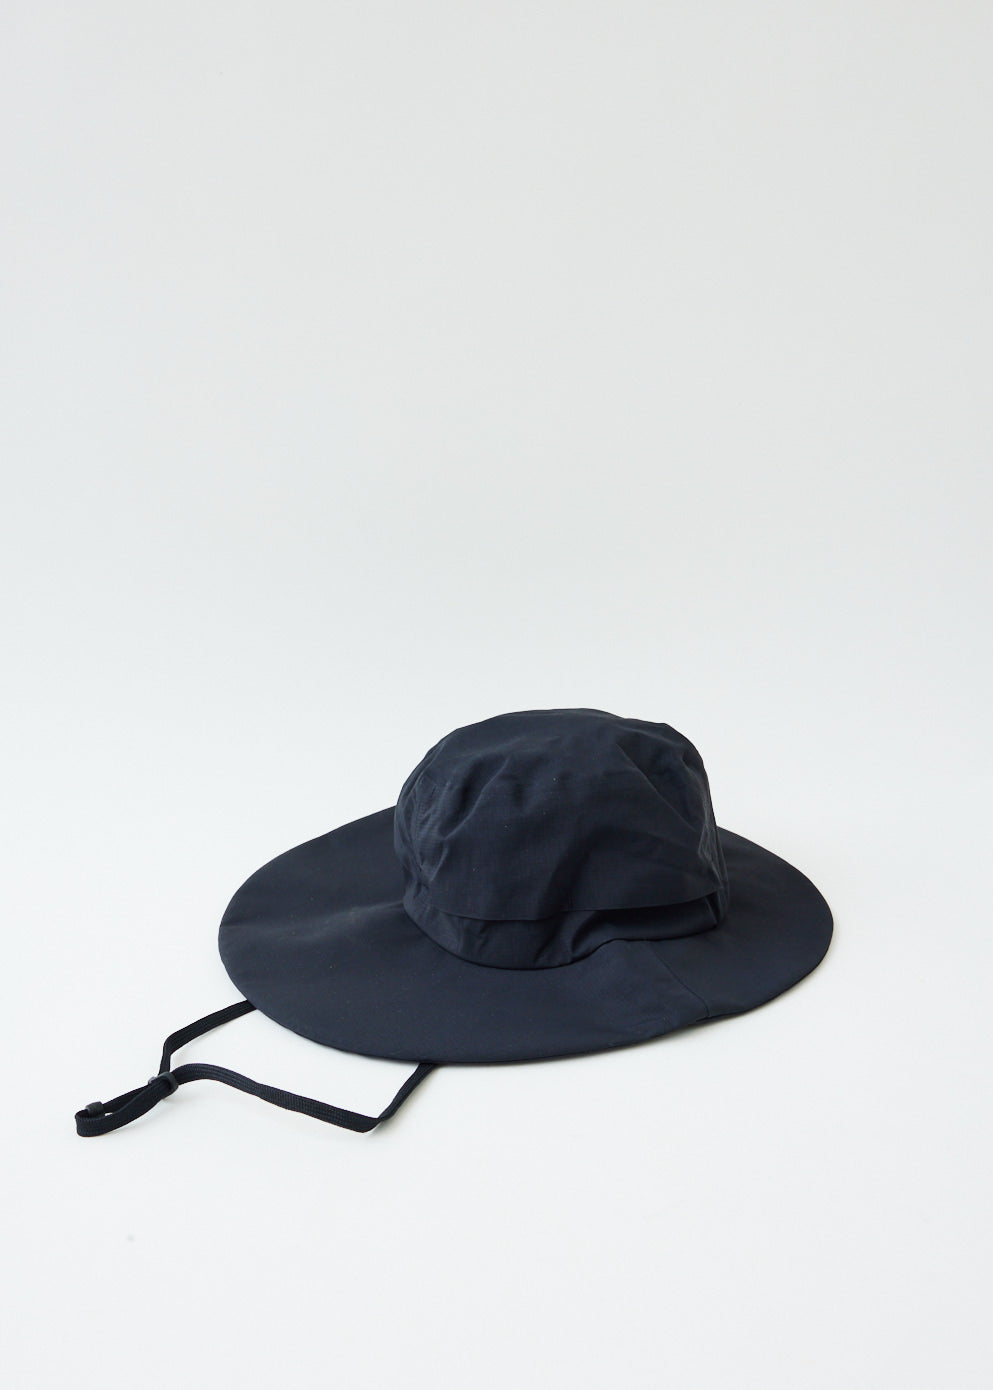 NRG ACG Storm-FIT Bucket Hat